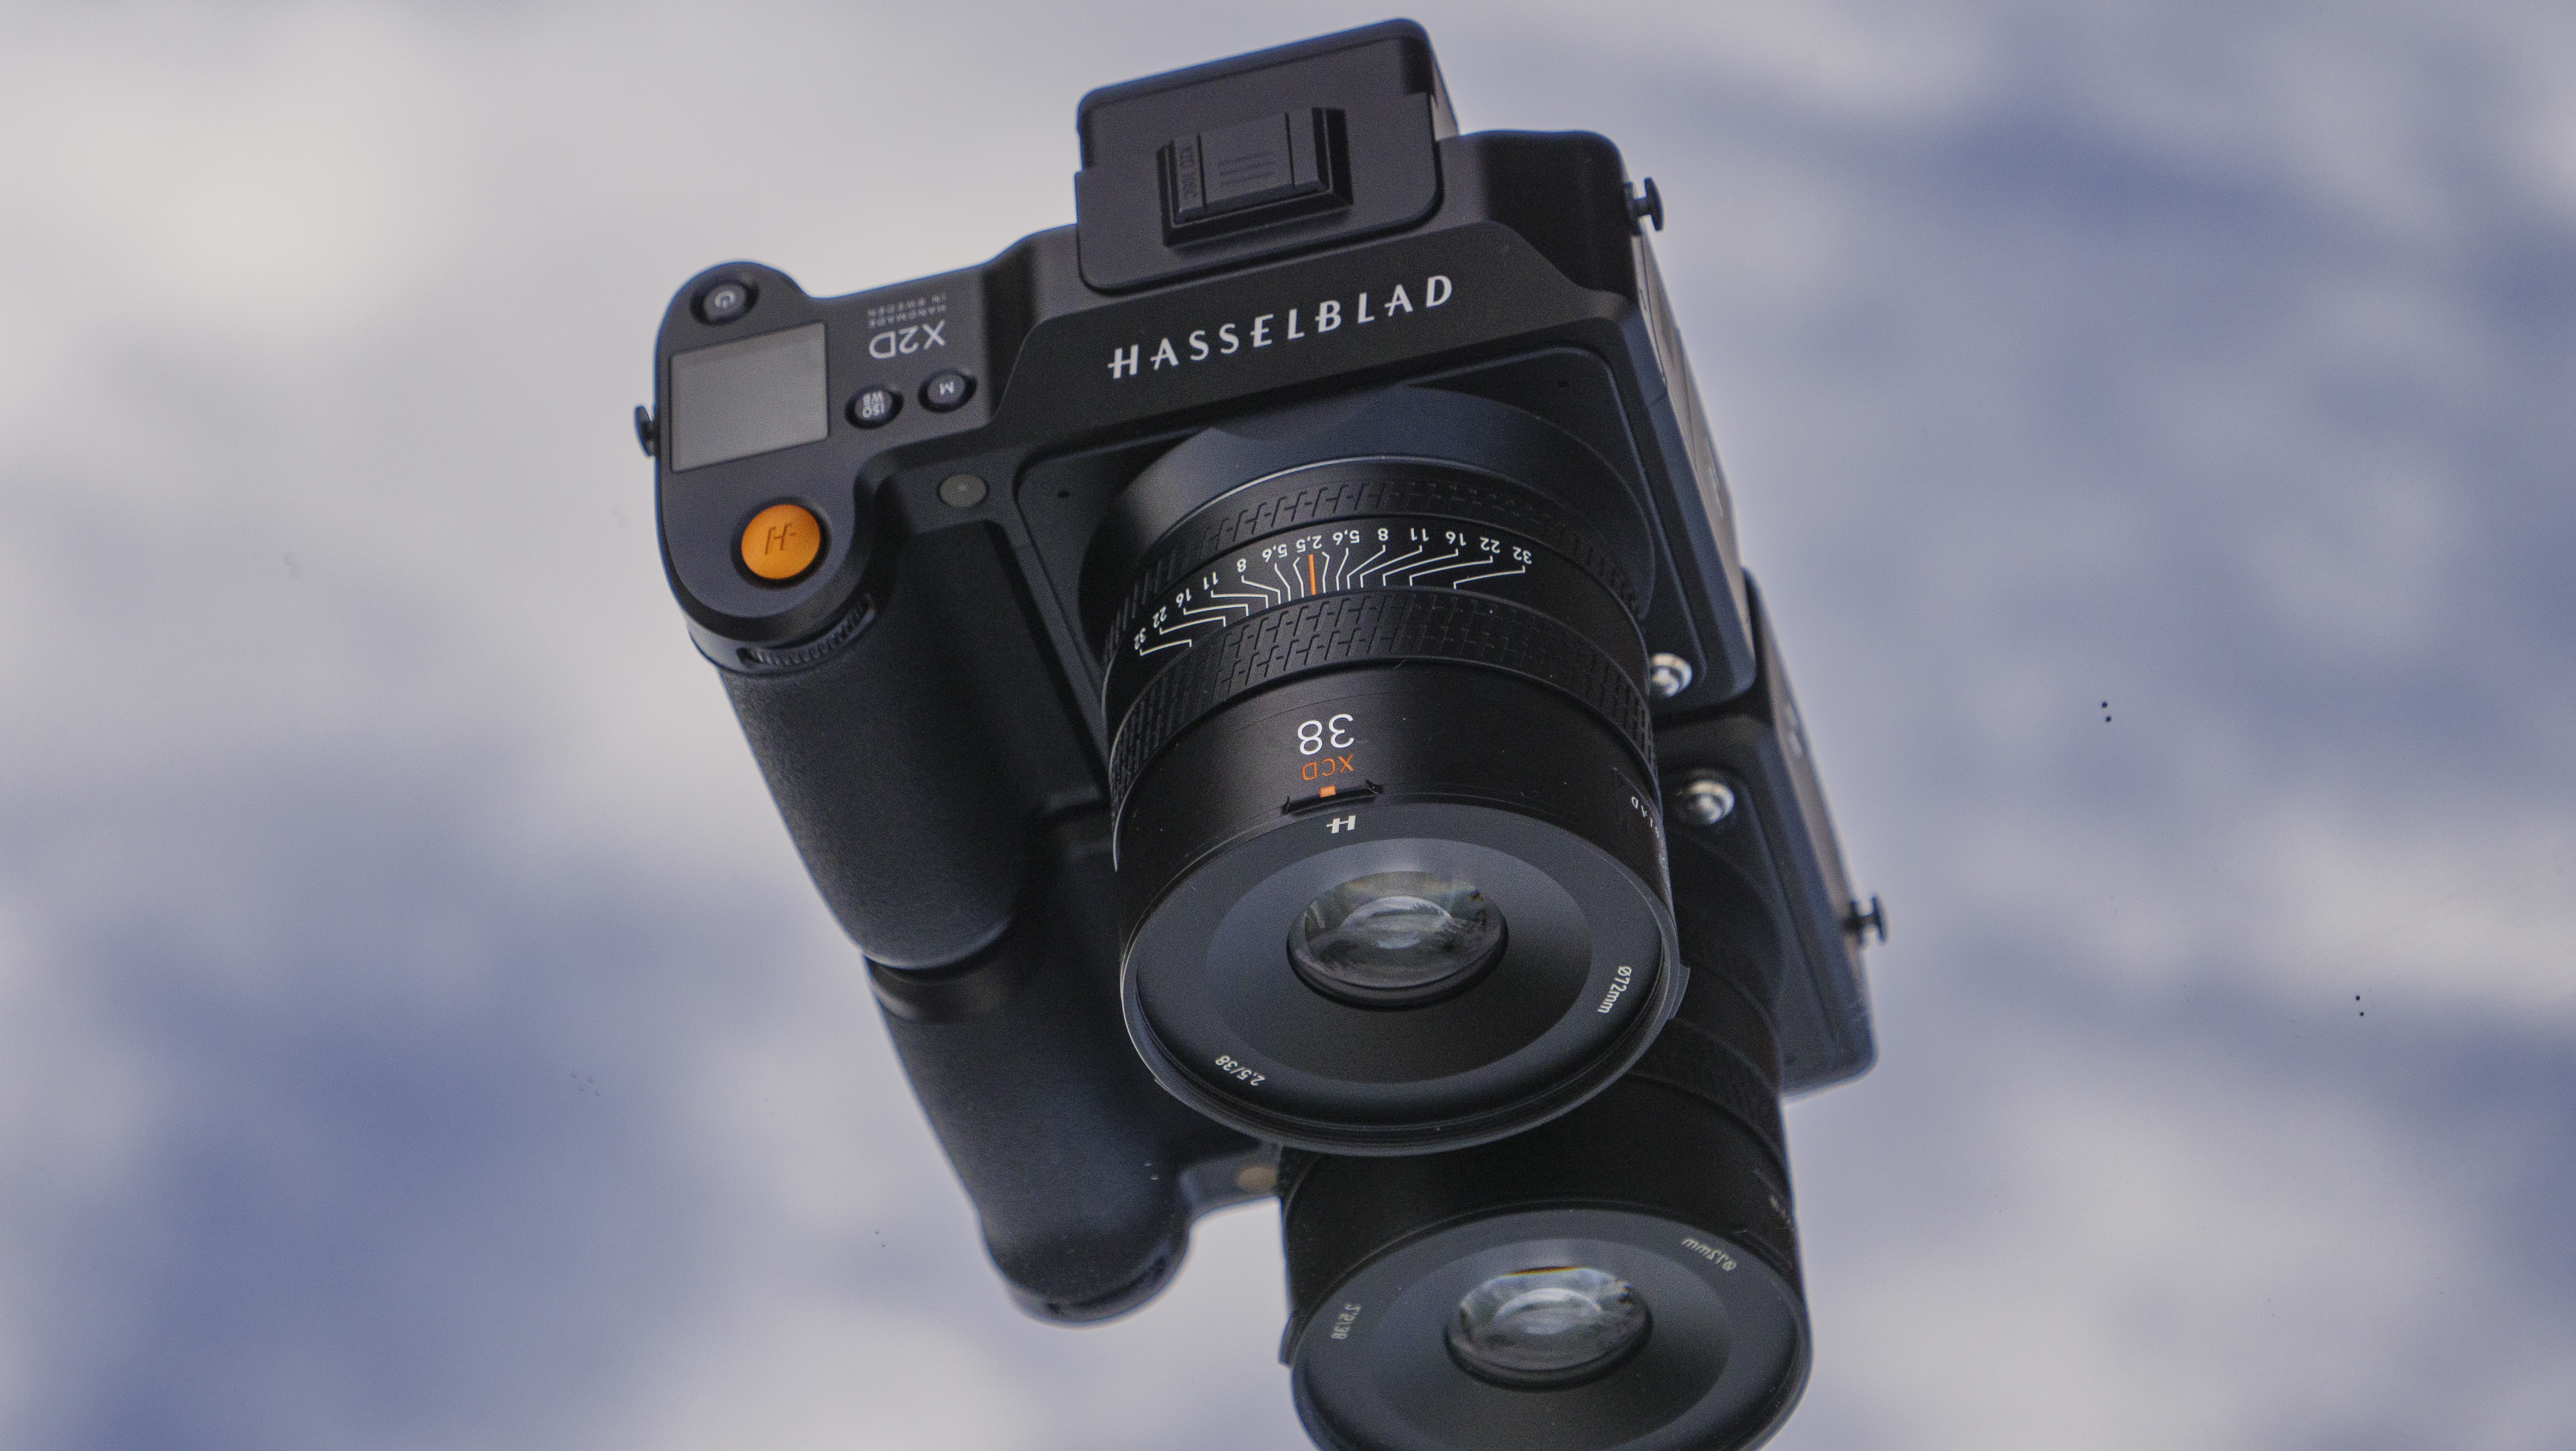 The Hasselblad X2D 100C camera